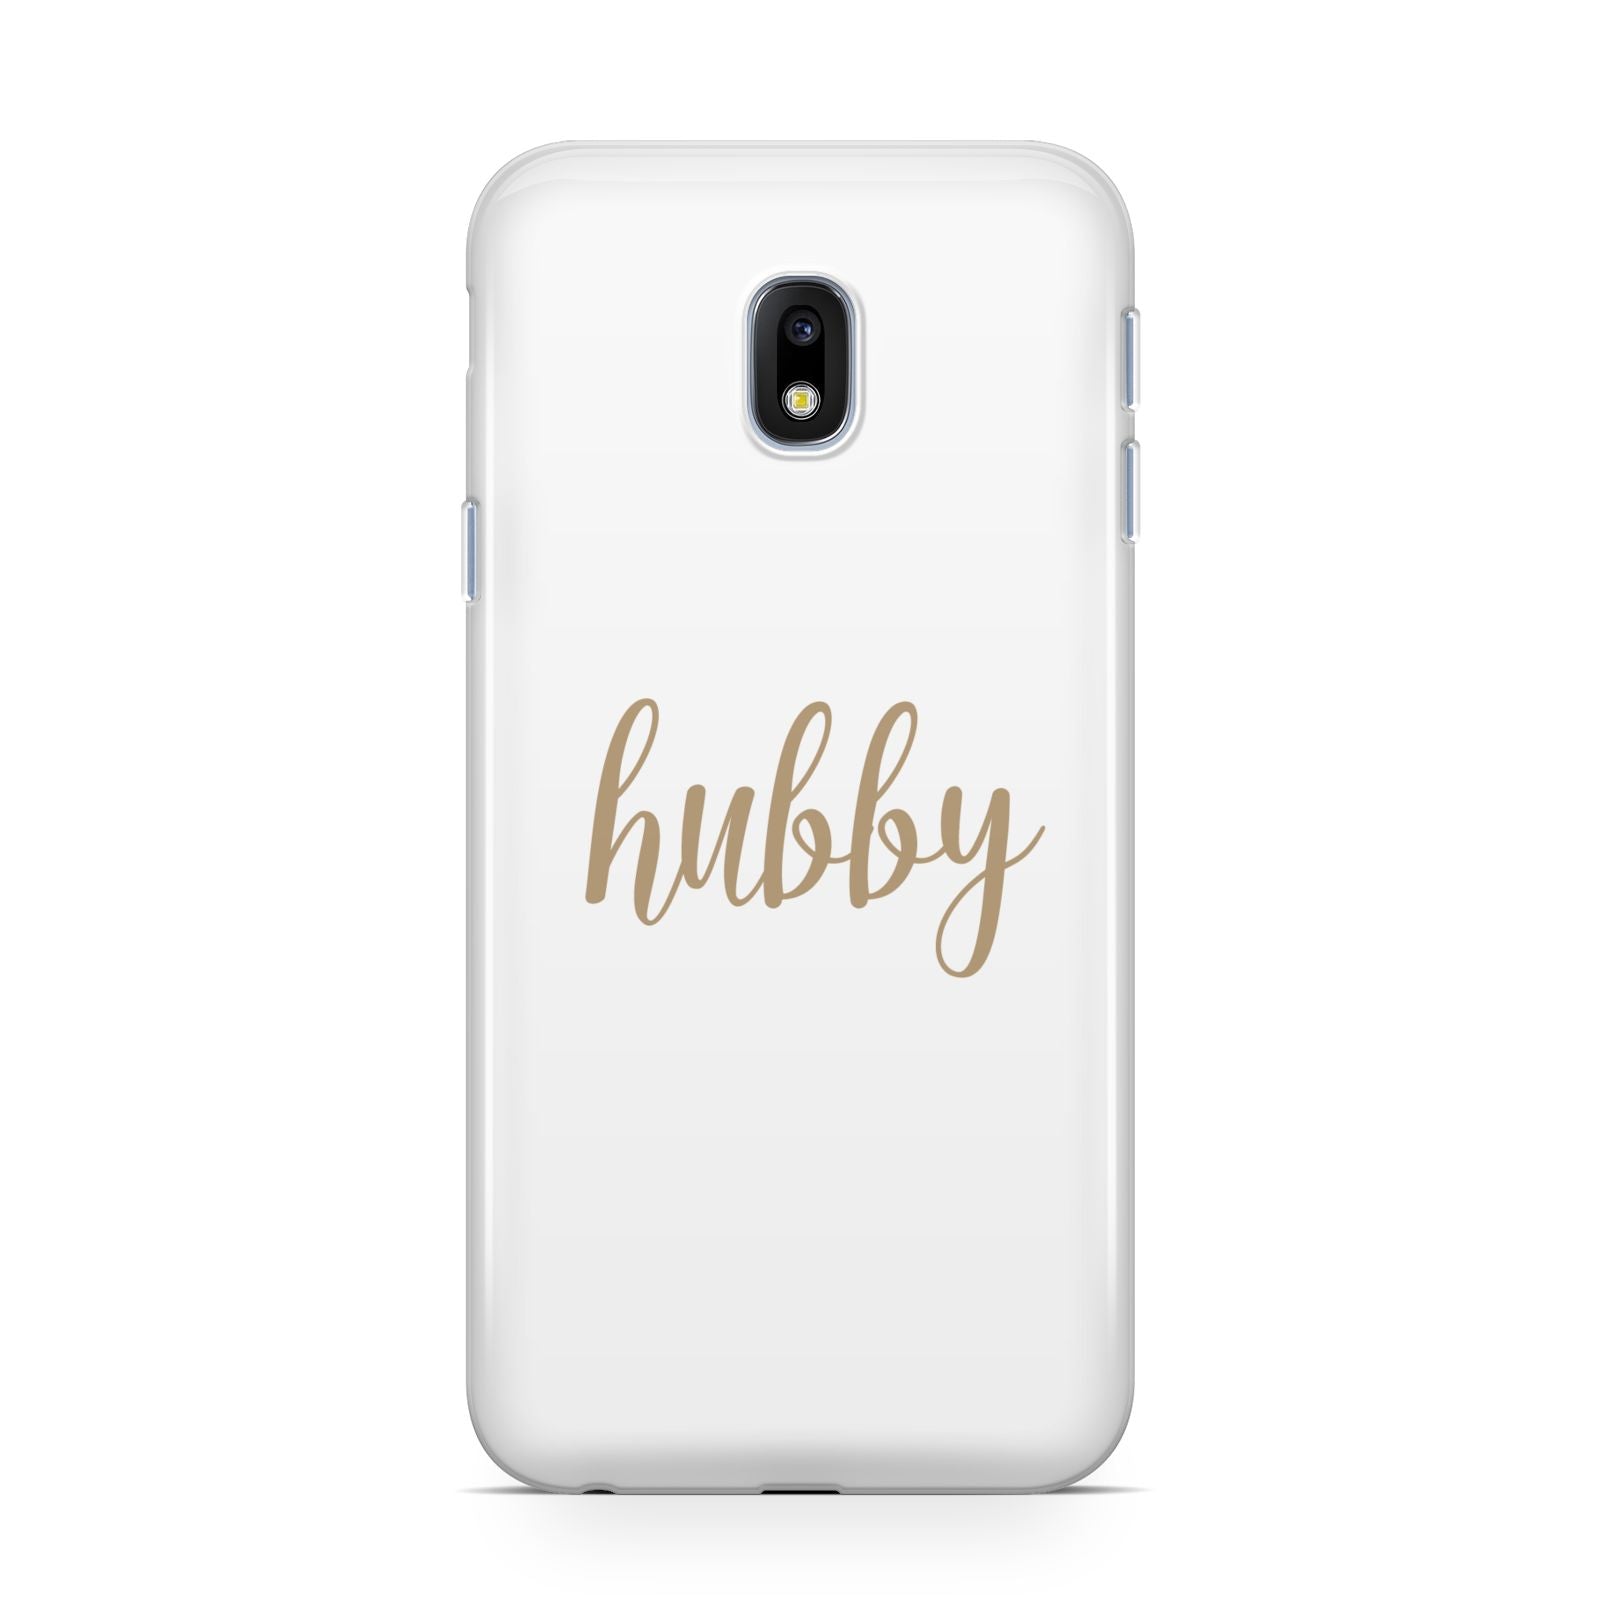 Hubby Samsung Galaxy J3 2017 Case